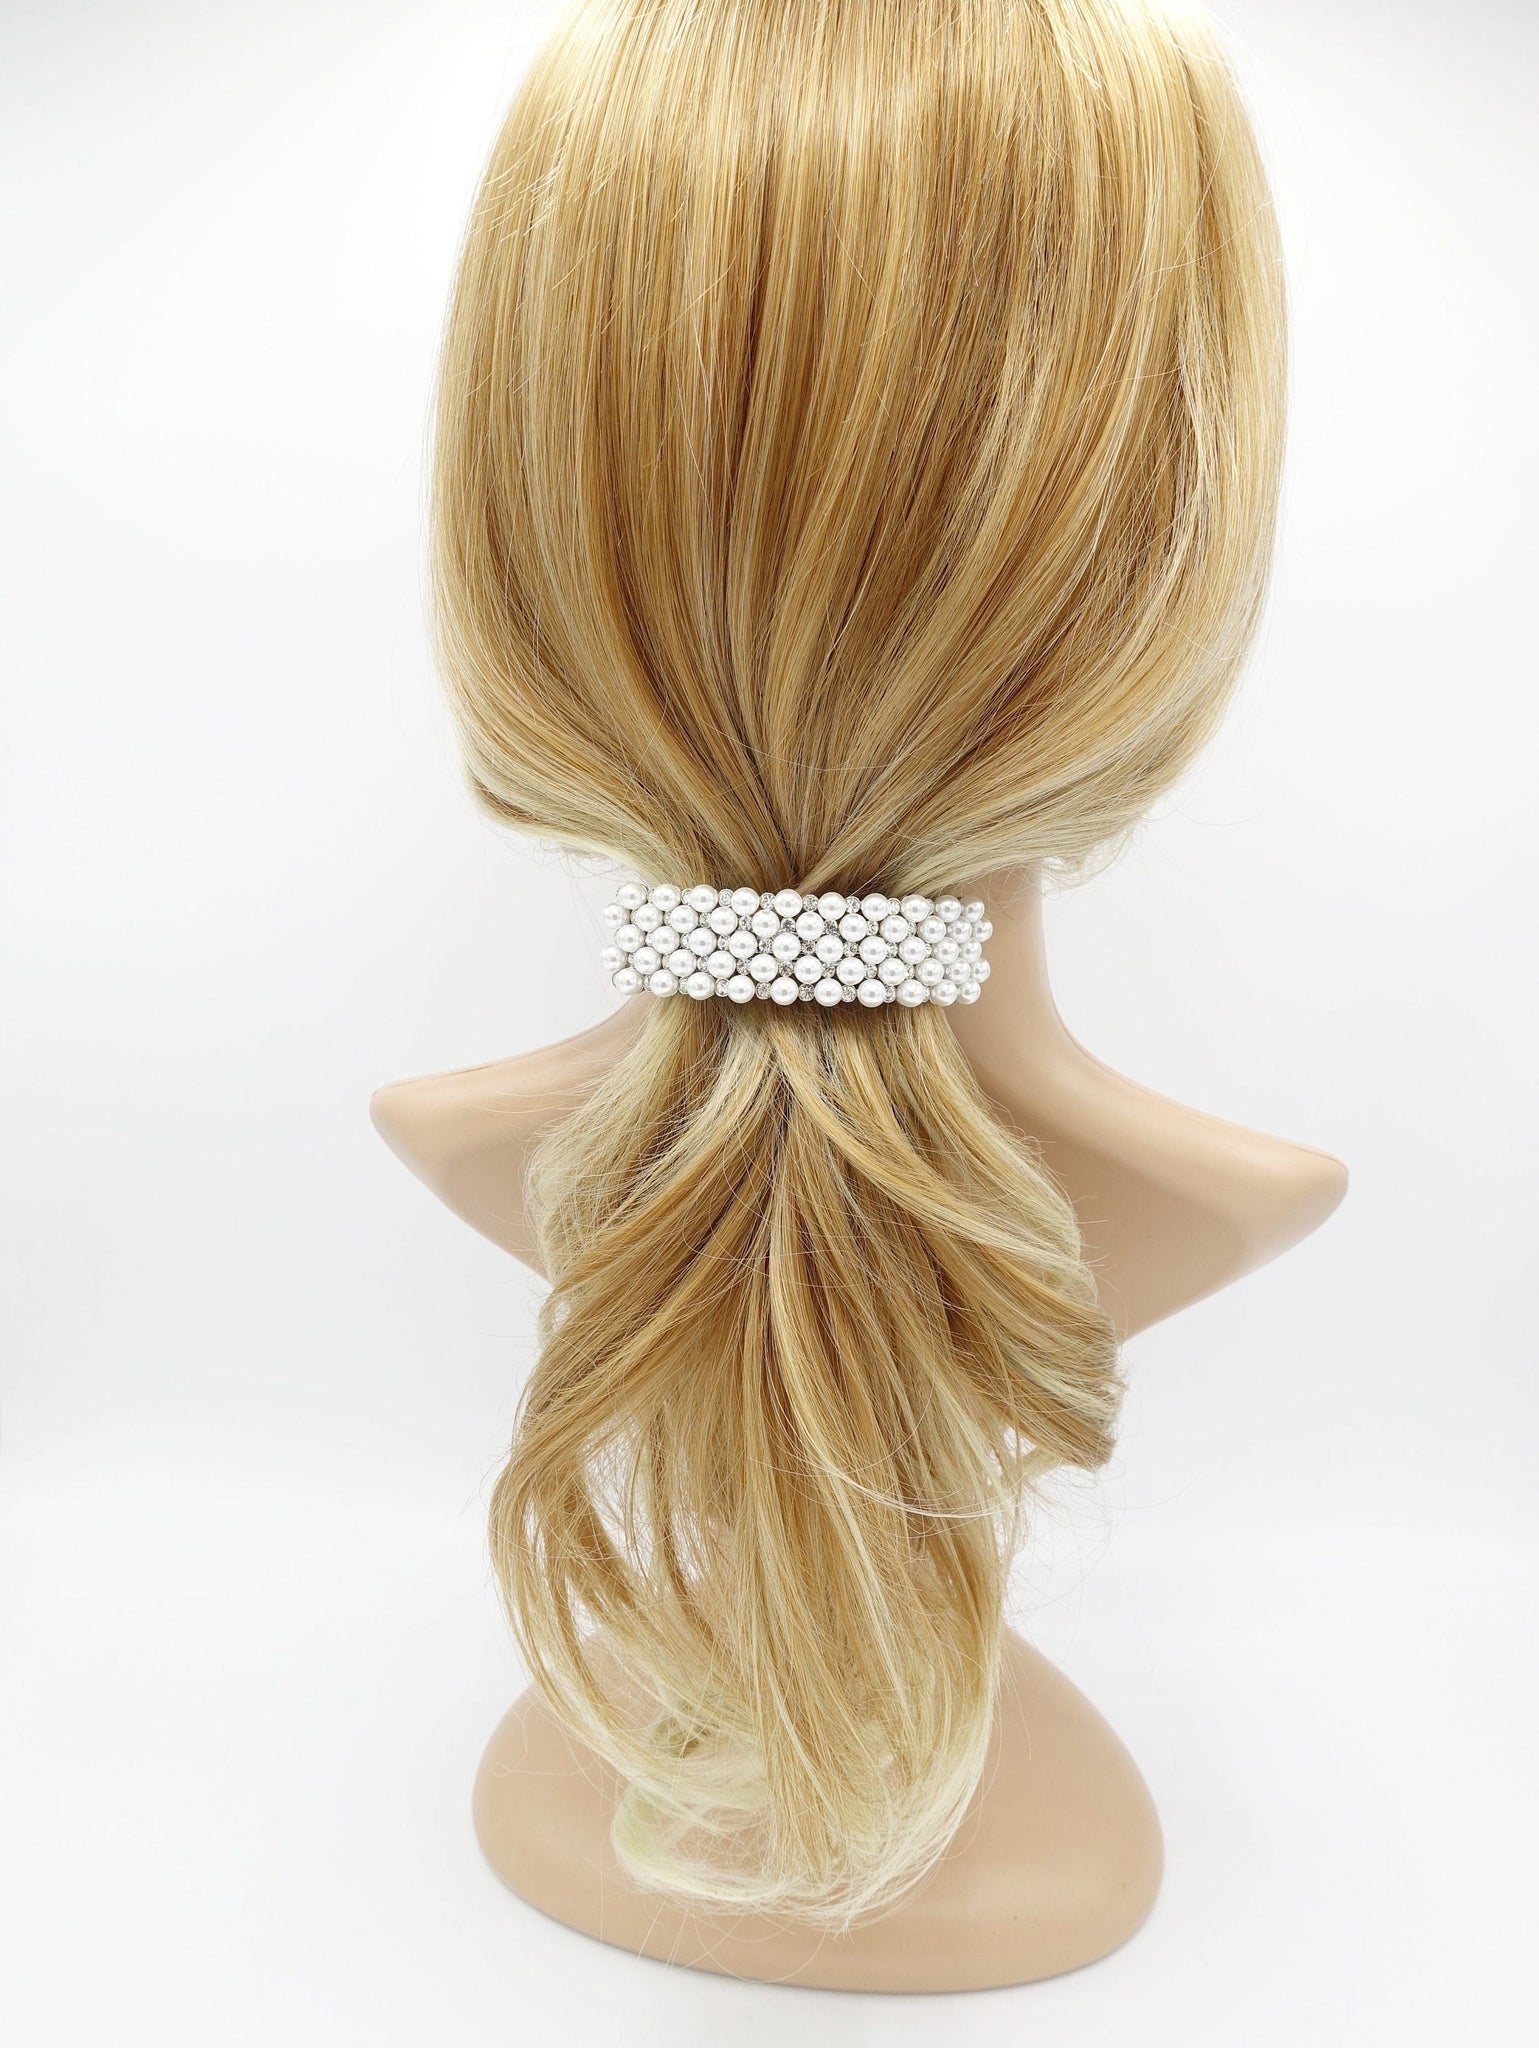 veryshine.com curved rhinestone pearl hair barrette embellished rectangle barrette hair accessory for women